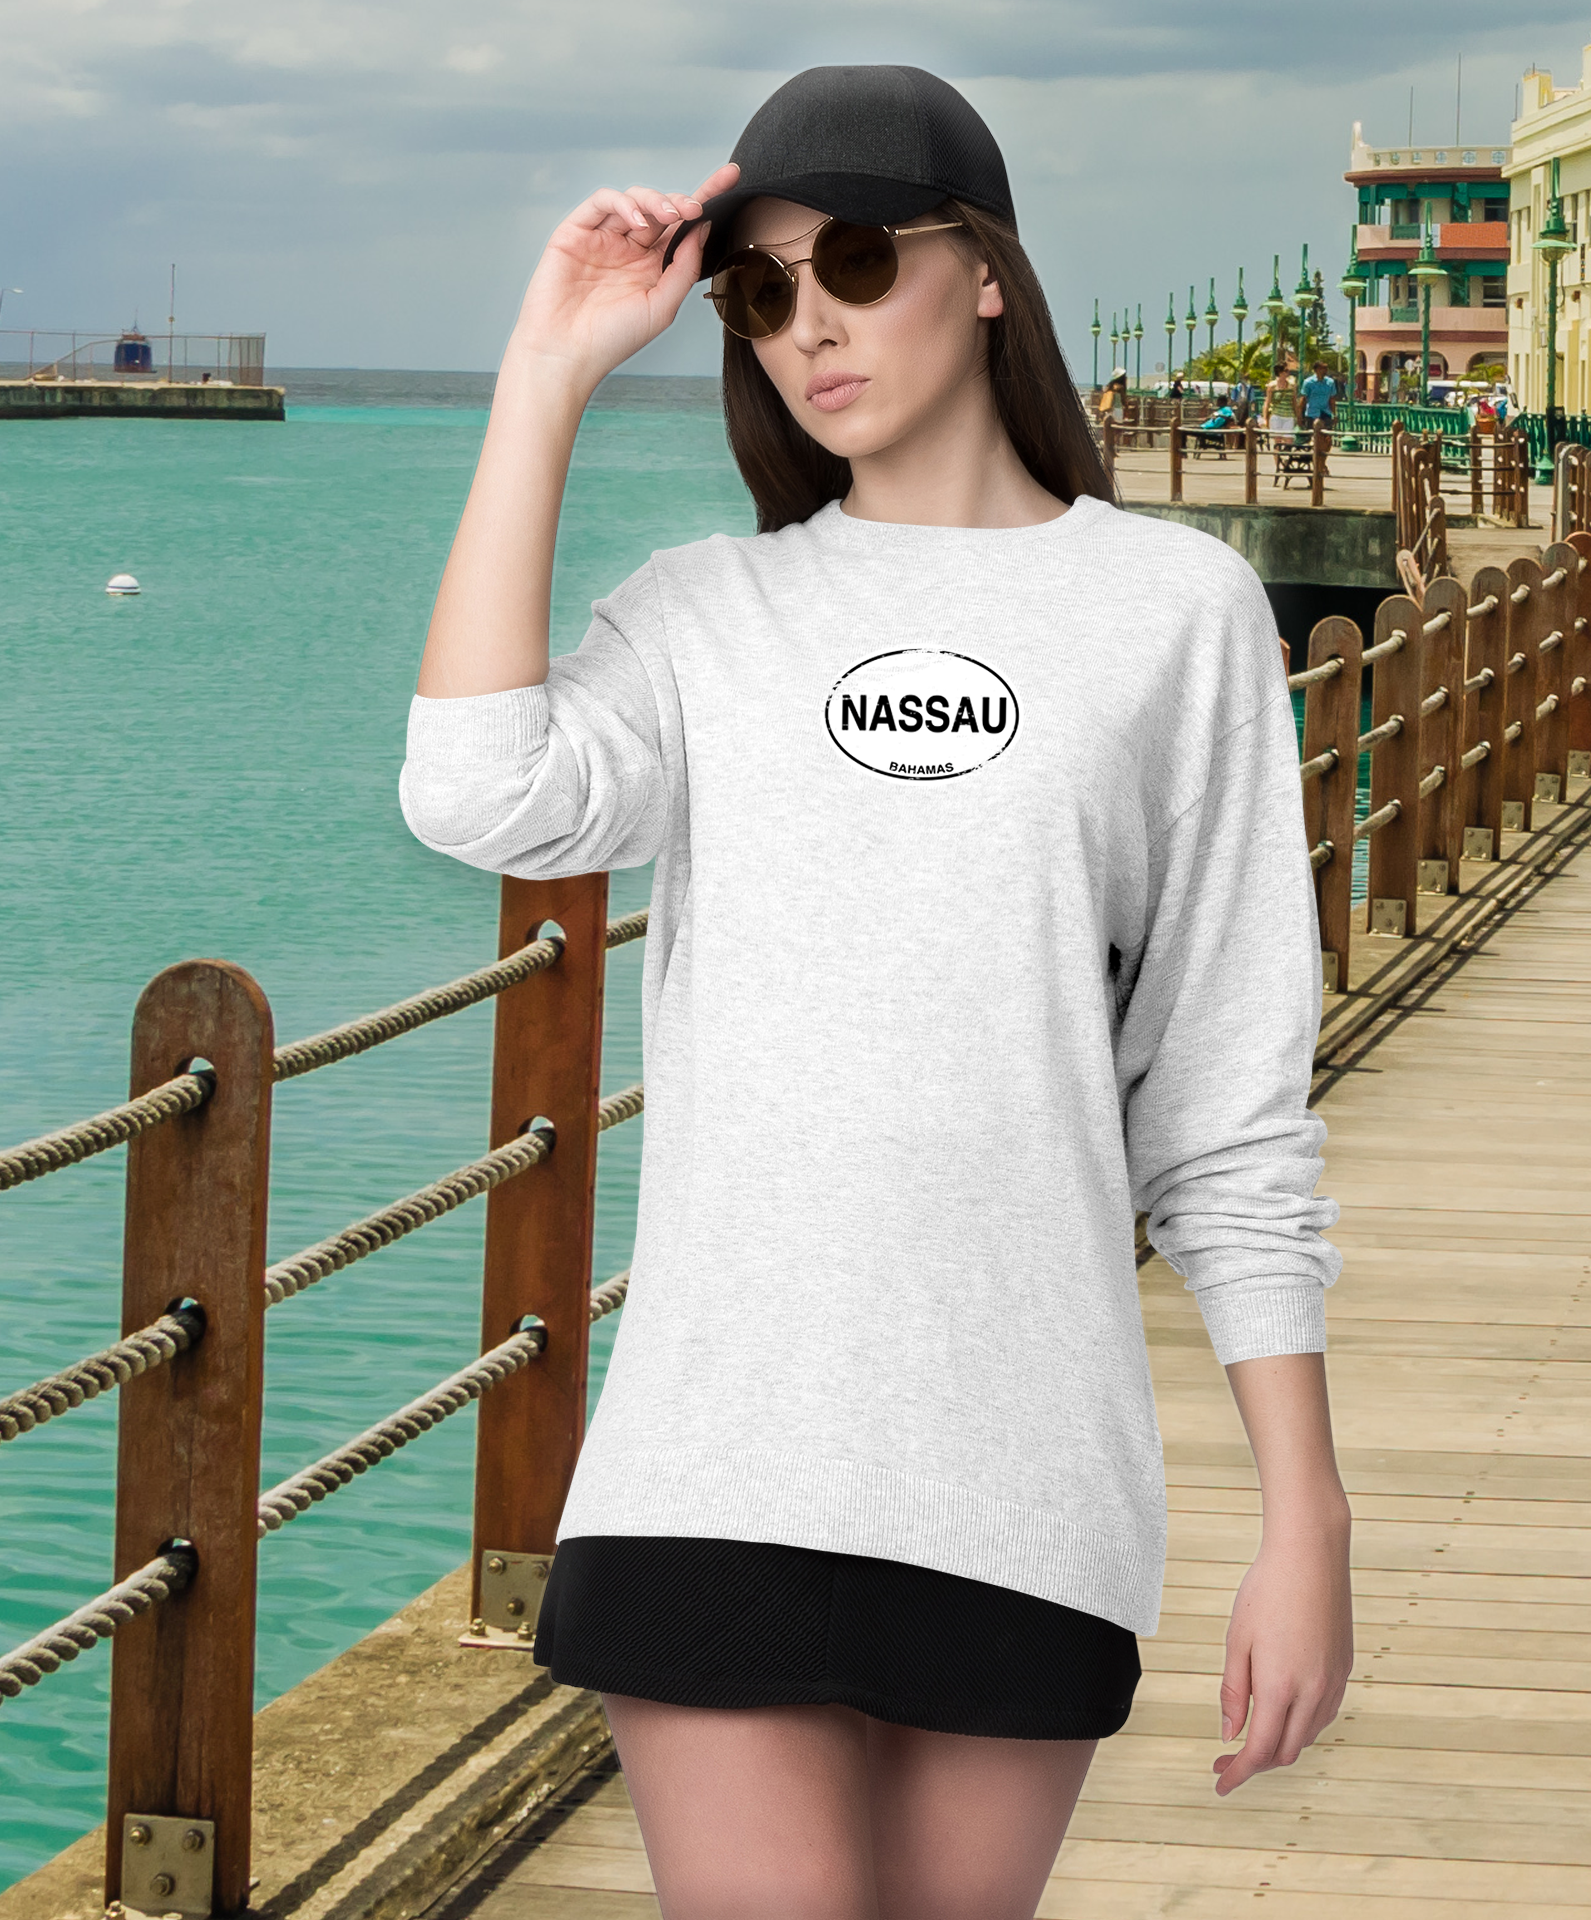 Nassau Bahamas Women's Classic Long Sleeve T-Shirts - My Destination Location